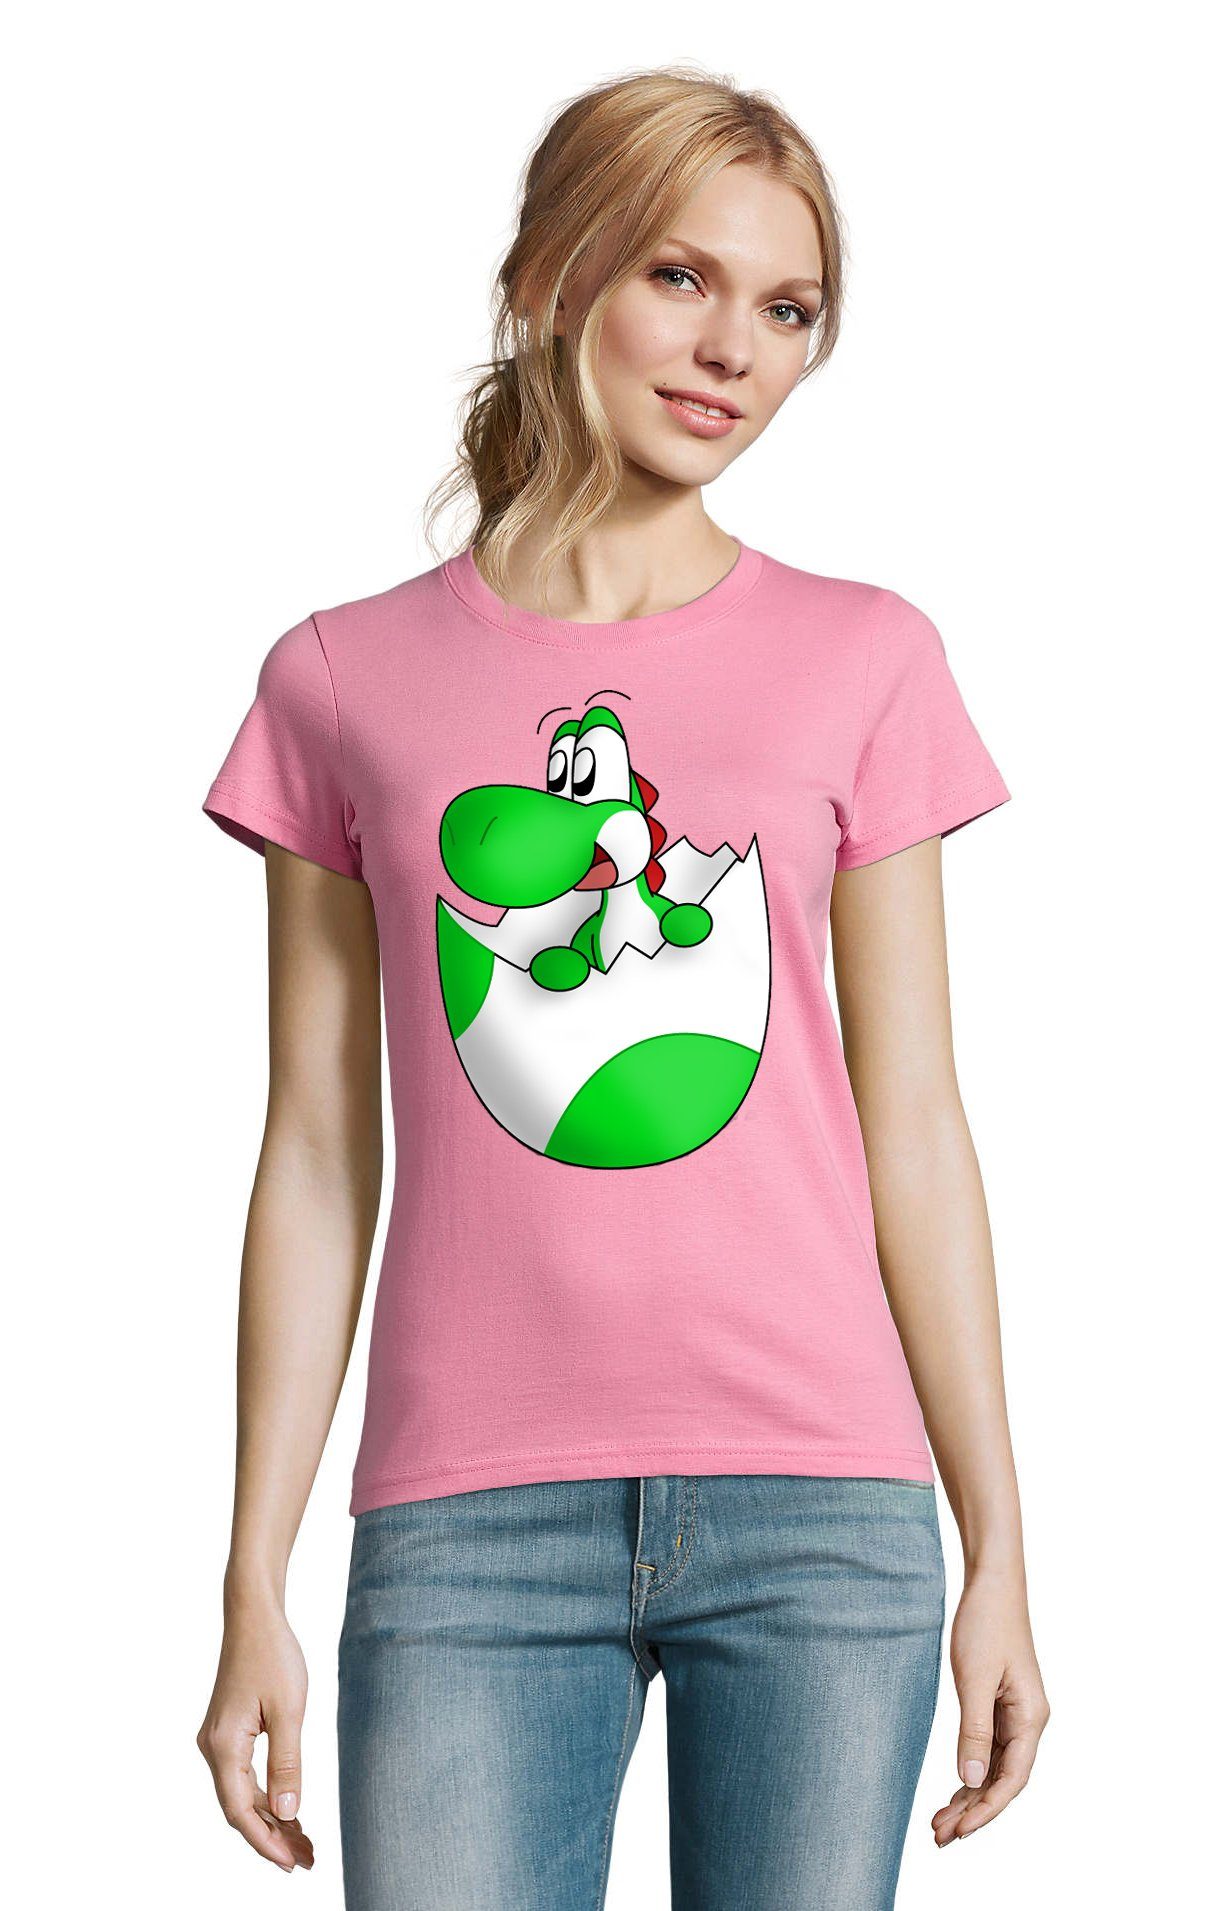 Nintendo Ei T-Shirt Damen Brownie Mario Spiel Konsole Yoshi Rosa Gaming & Blondie Baby